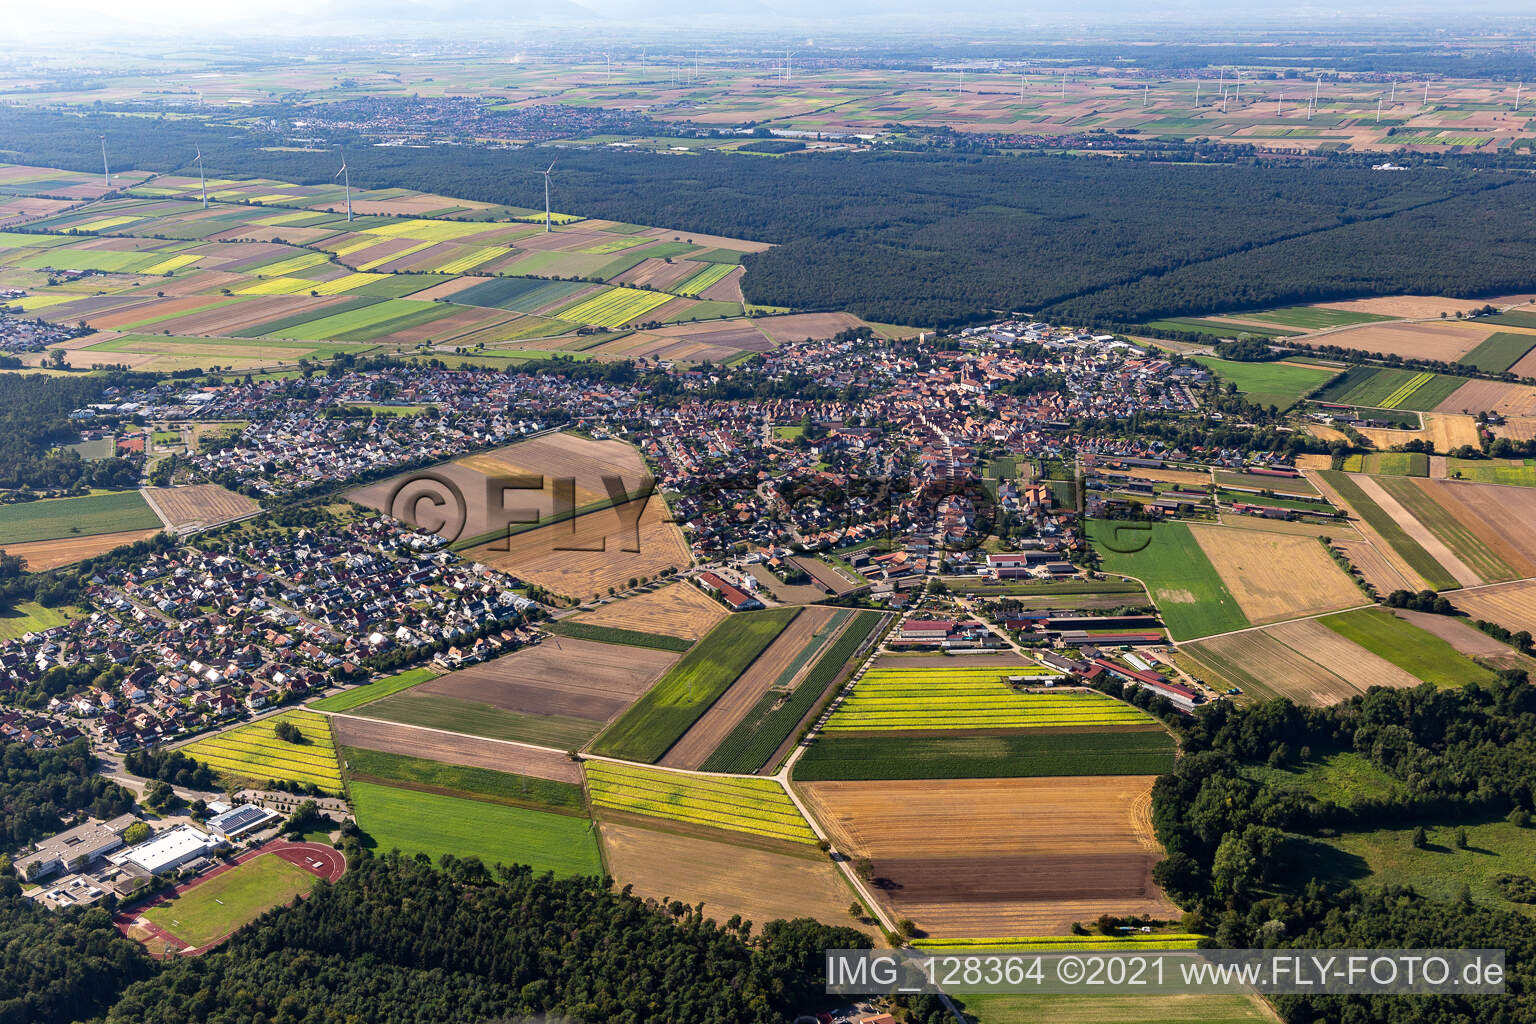 Rheinzabern in the state Rhineland-Palatinate, Germany seen from above